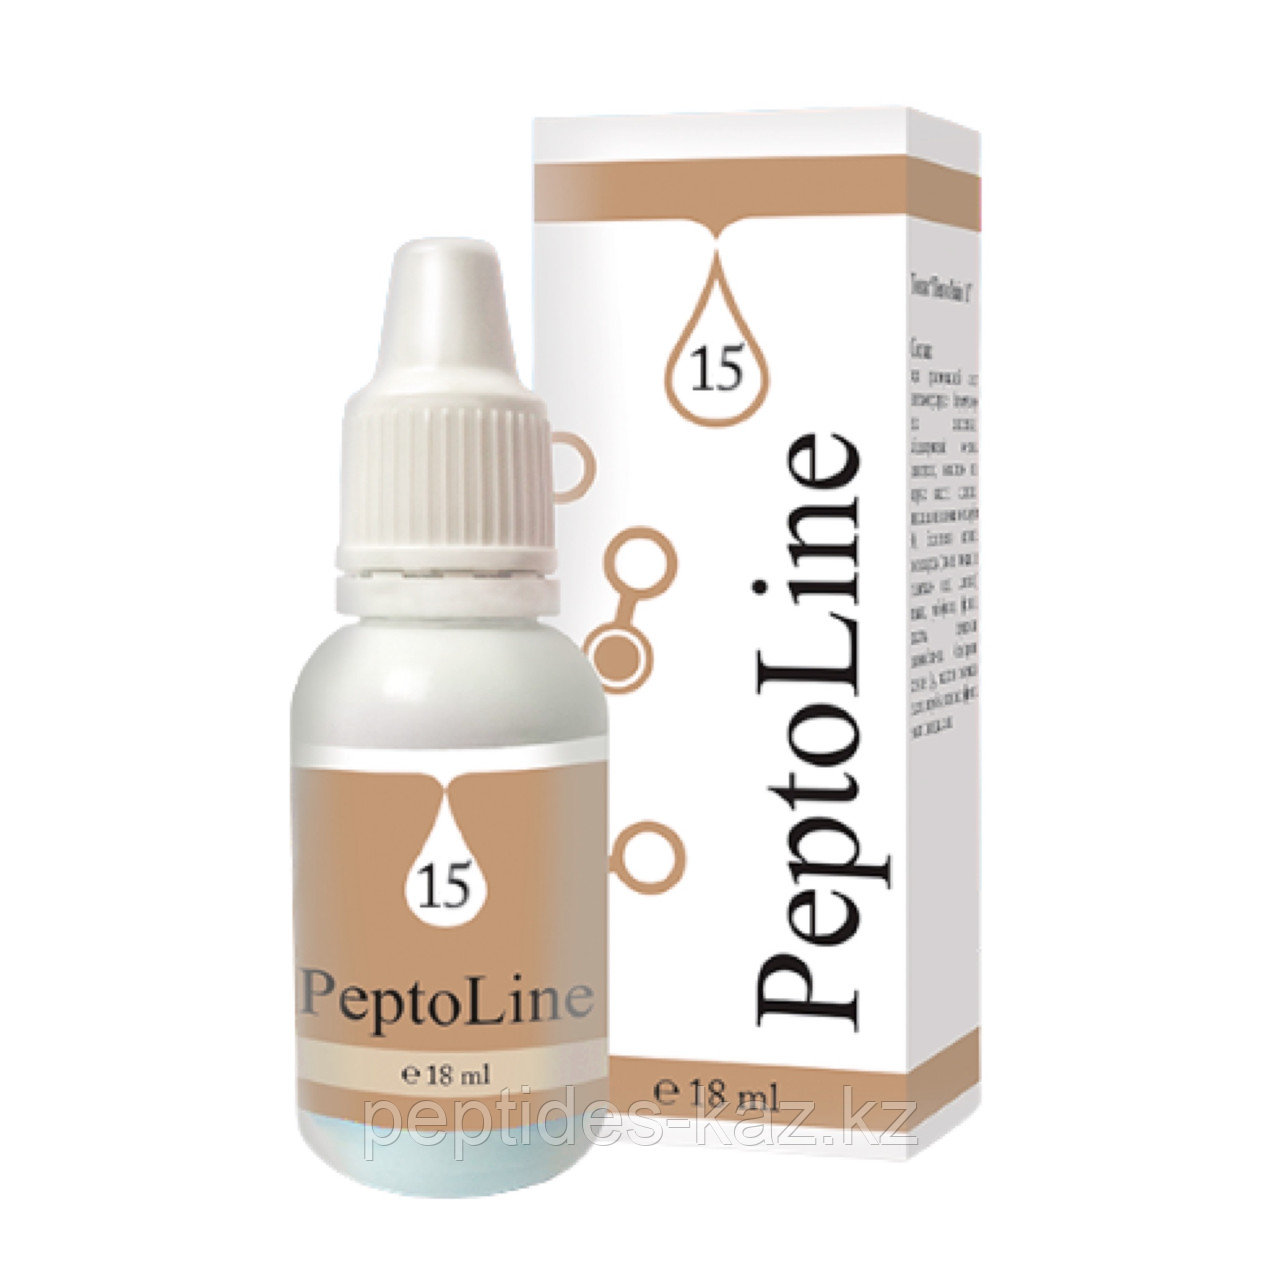 PeptoLine 15 для молочных желез, пептидный комплекс 18 мл